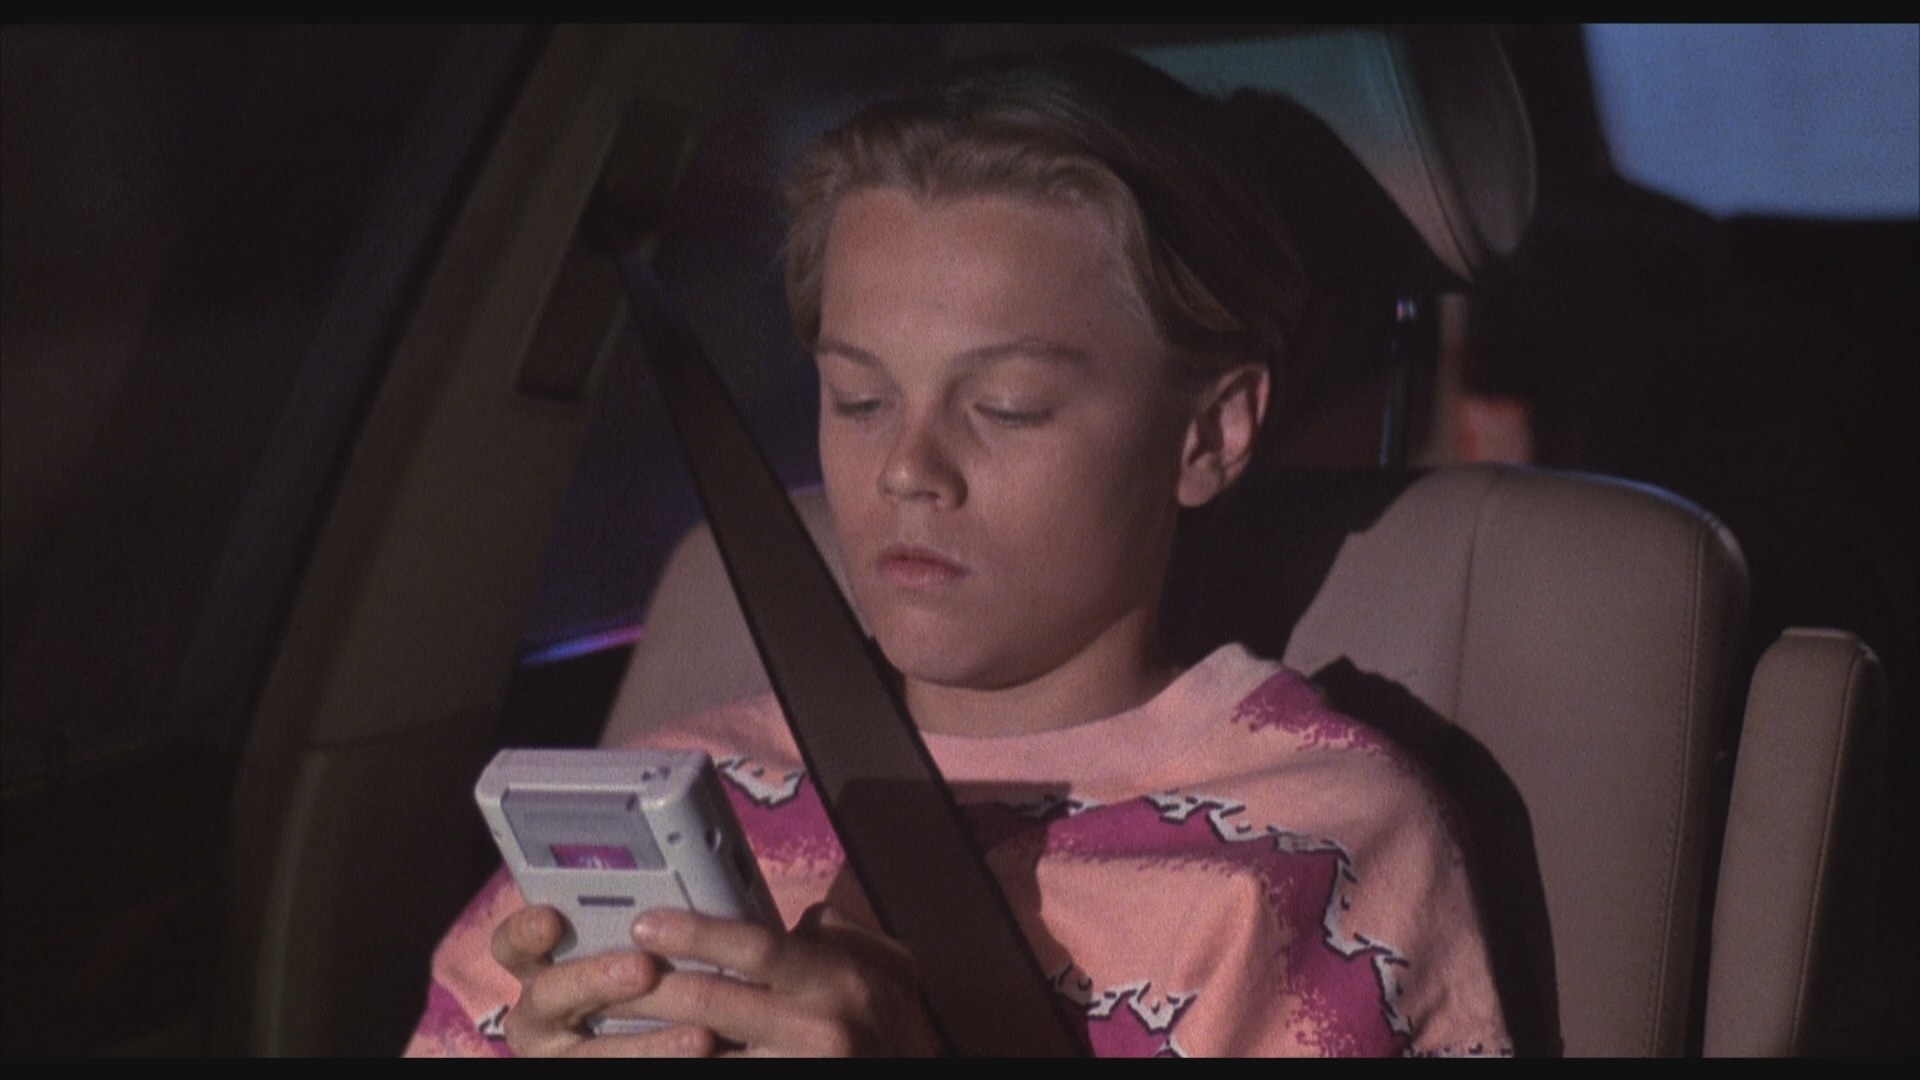 Leonardo DiCapro plays a GameBoy in a car